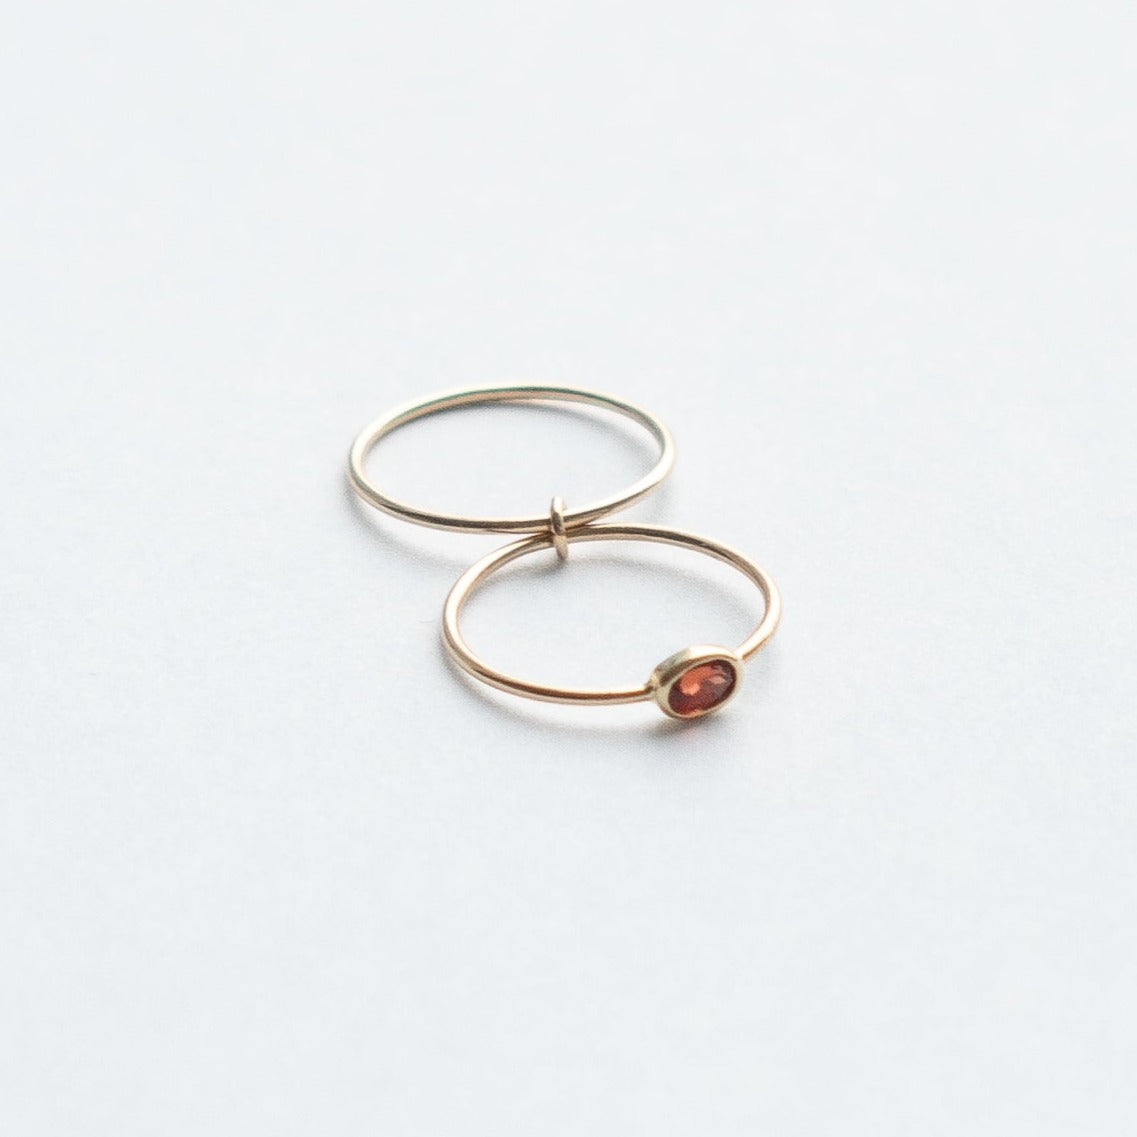 Dana Alternative Ring in 14k Gold set with a 0.3ct garnet by SHW Fine Jewelry